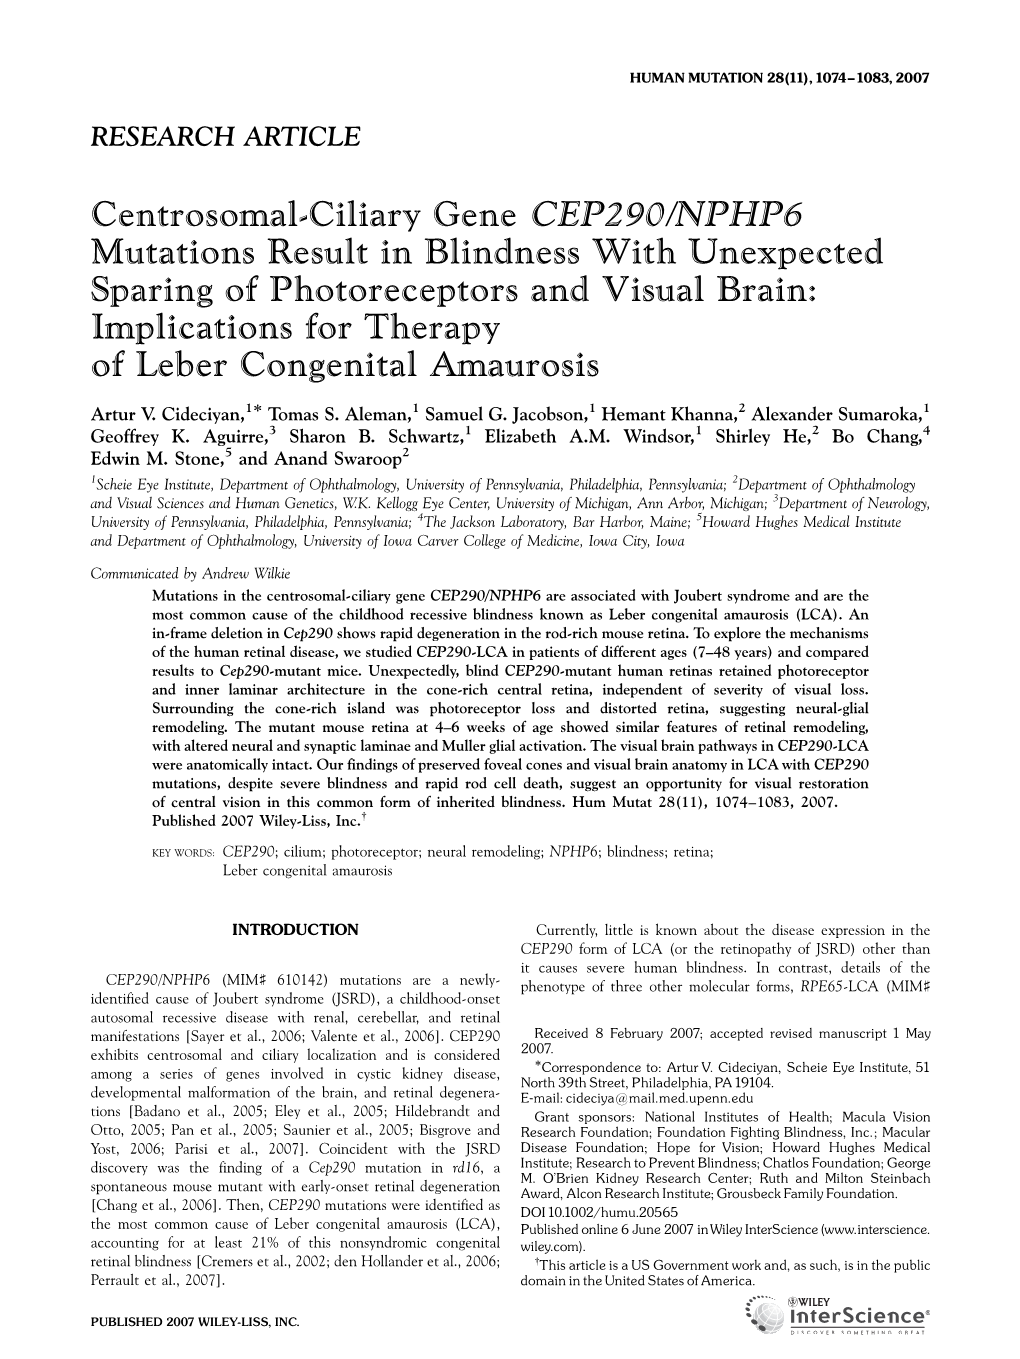 Centrosomal-Ciliary Gene CEP290/NPHP6 Mutations Result